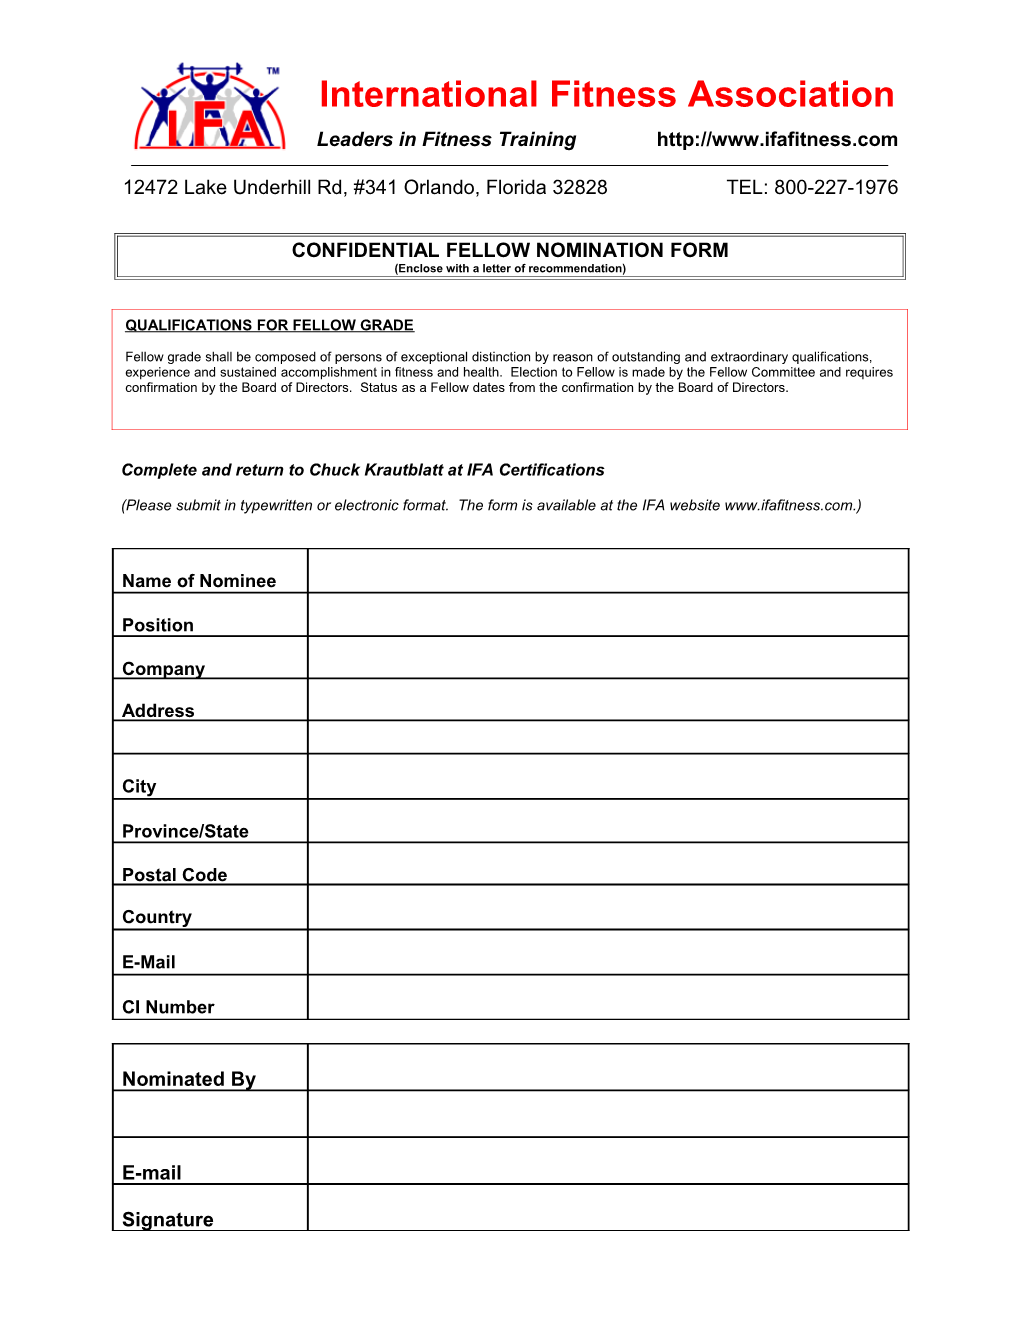 Confidential Fellow Nomination Form